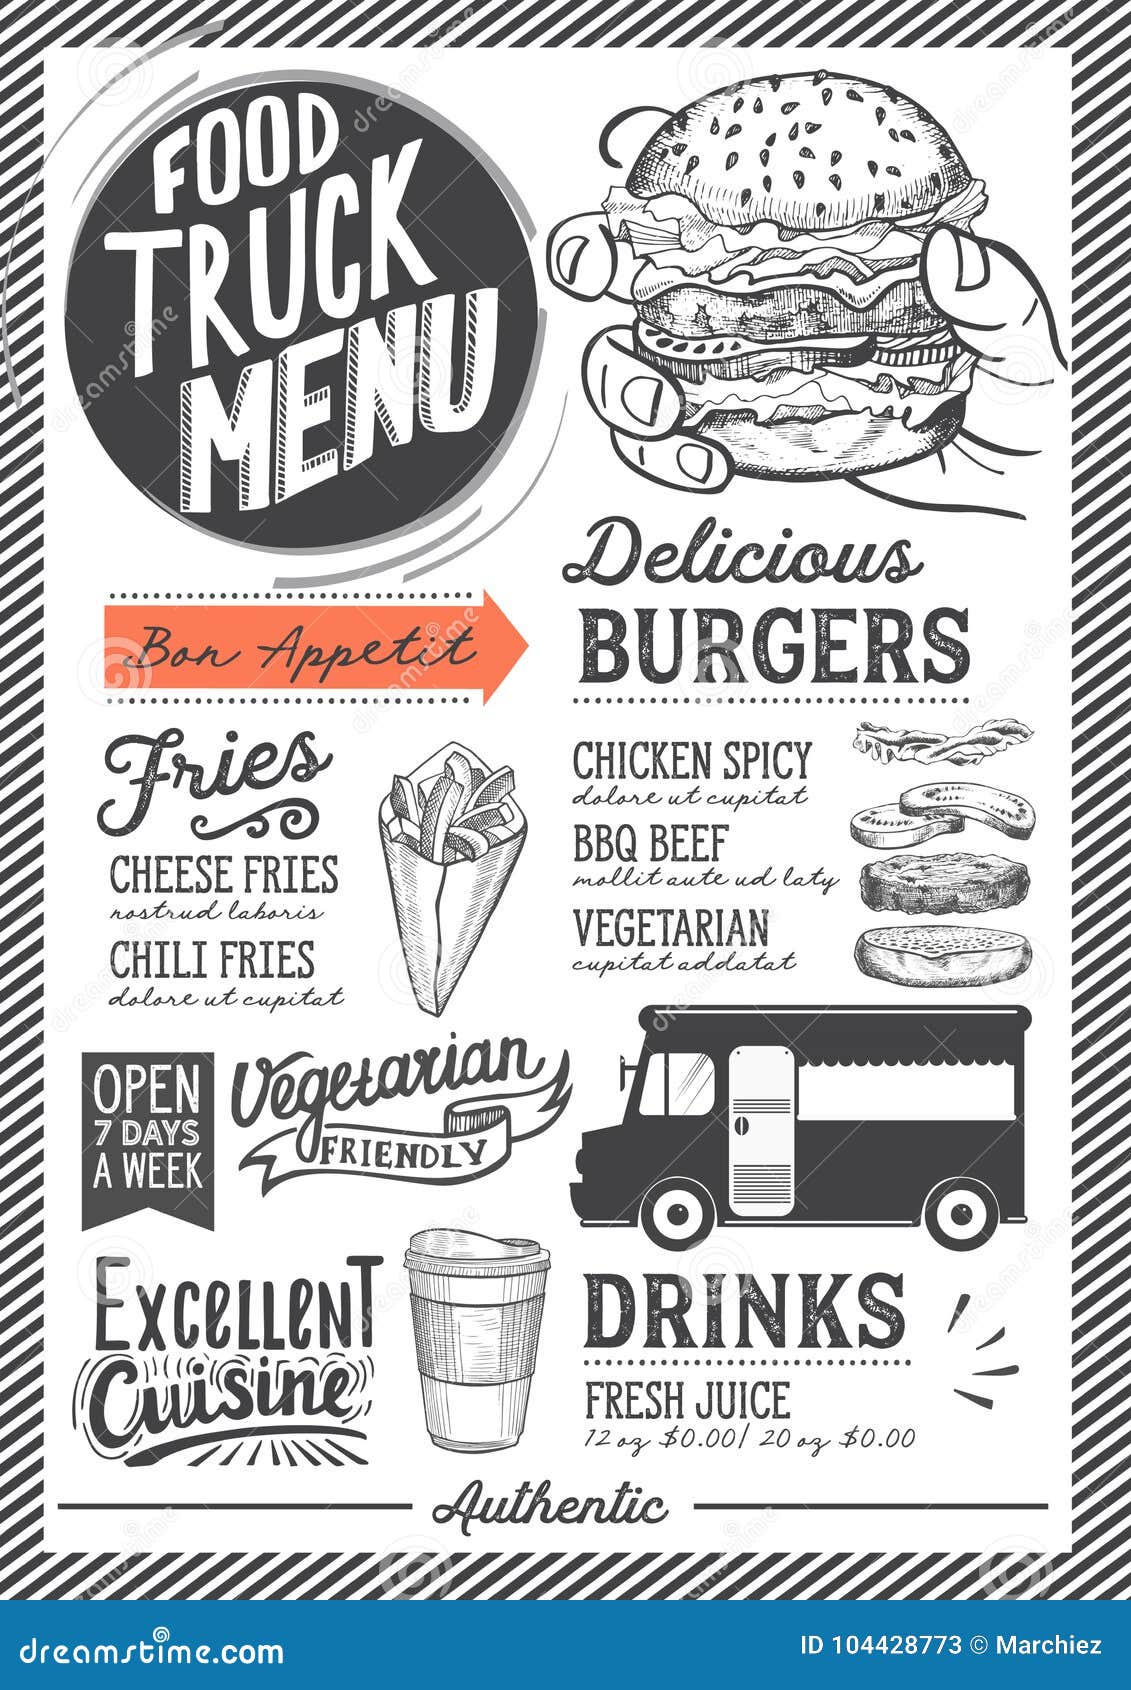 Food truck menu template. stock vector. Illustration of poster With Food Truck Menu Template